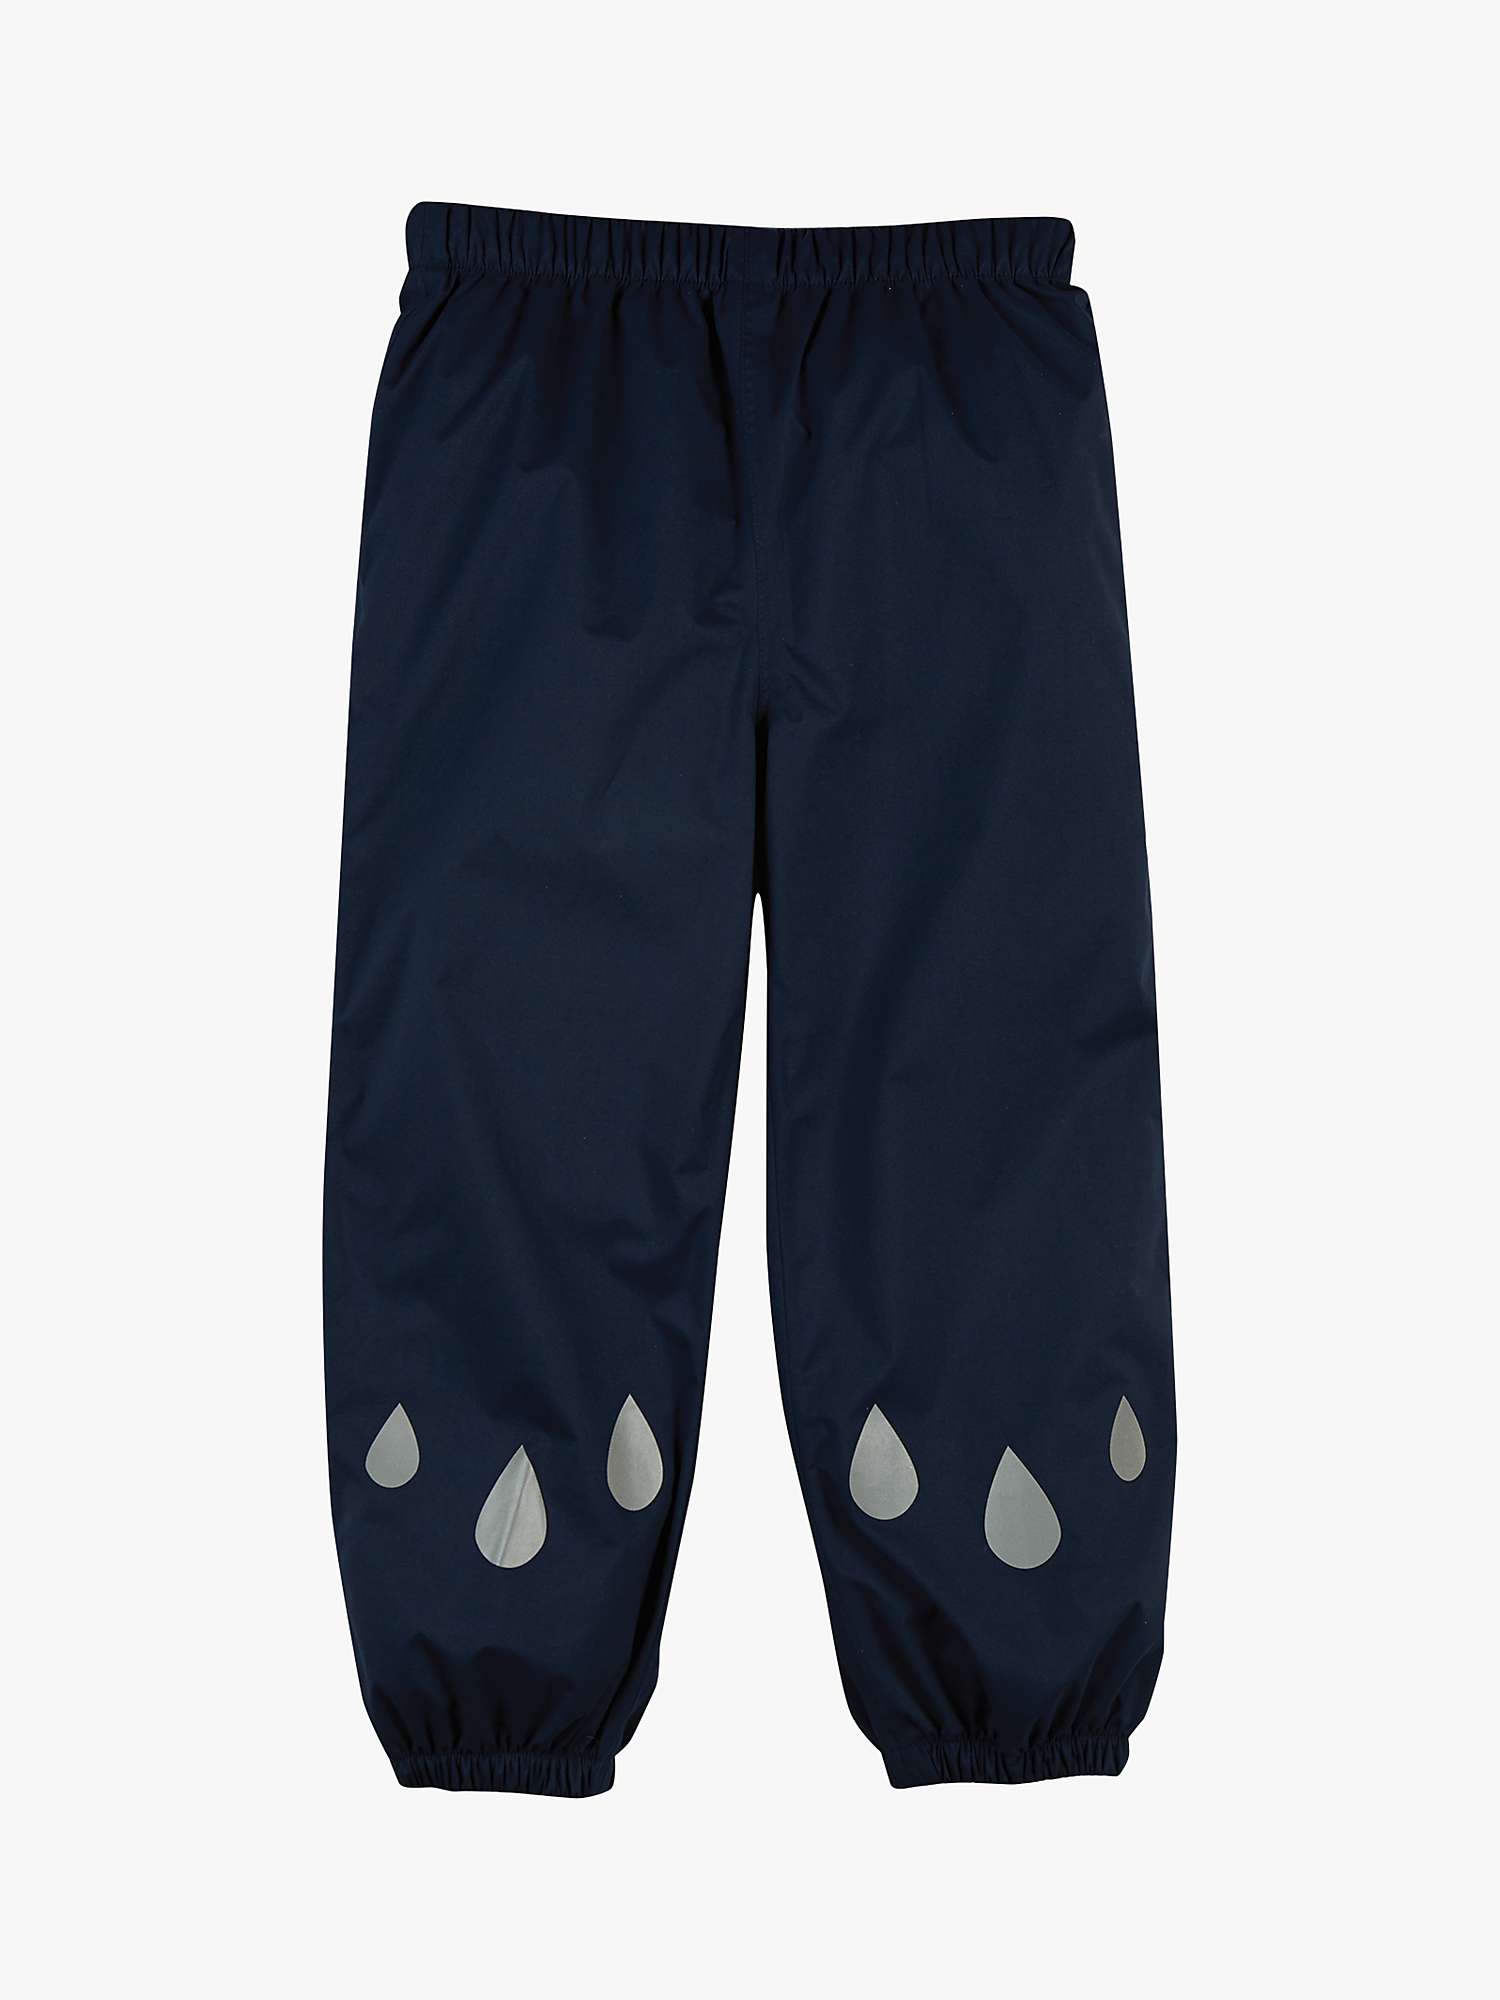 Buy Frugi Kids' Rain or Shine Waterproof Trousers, Indigo Online at johnlewis.com